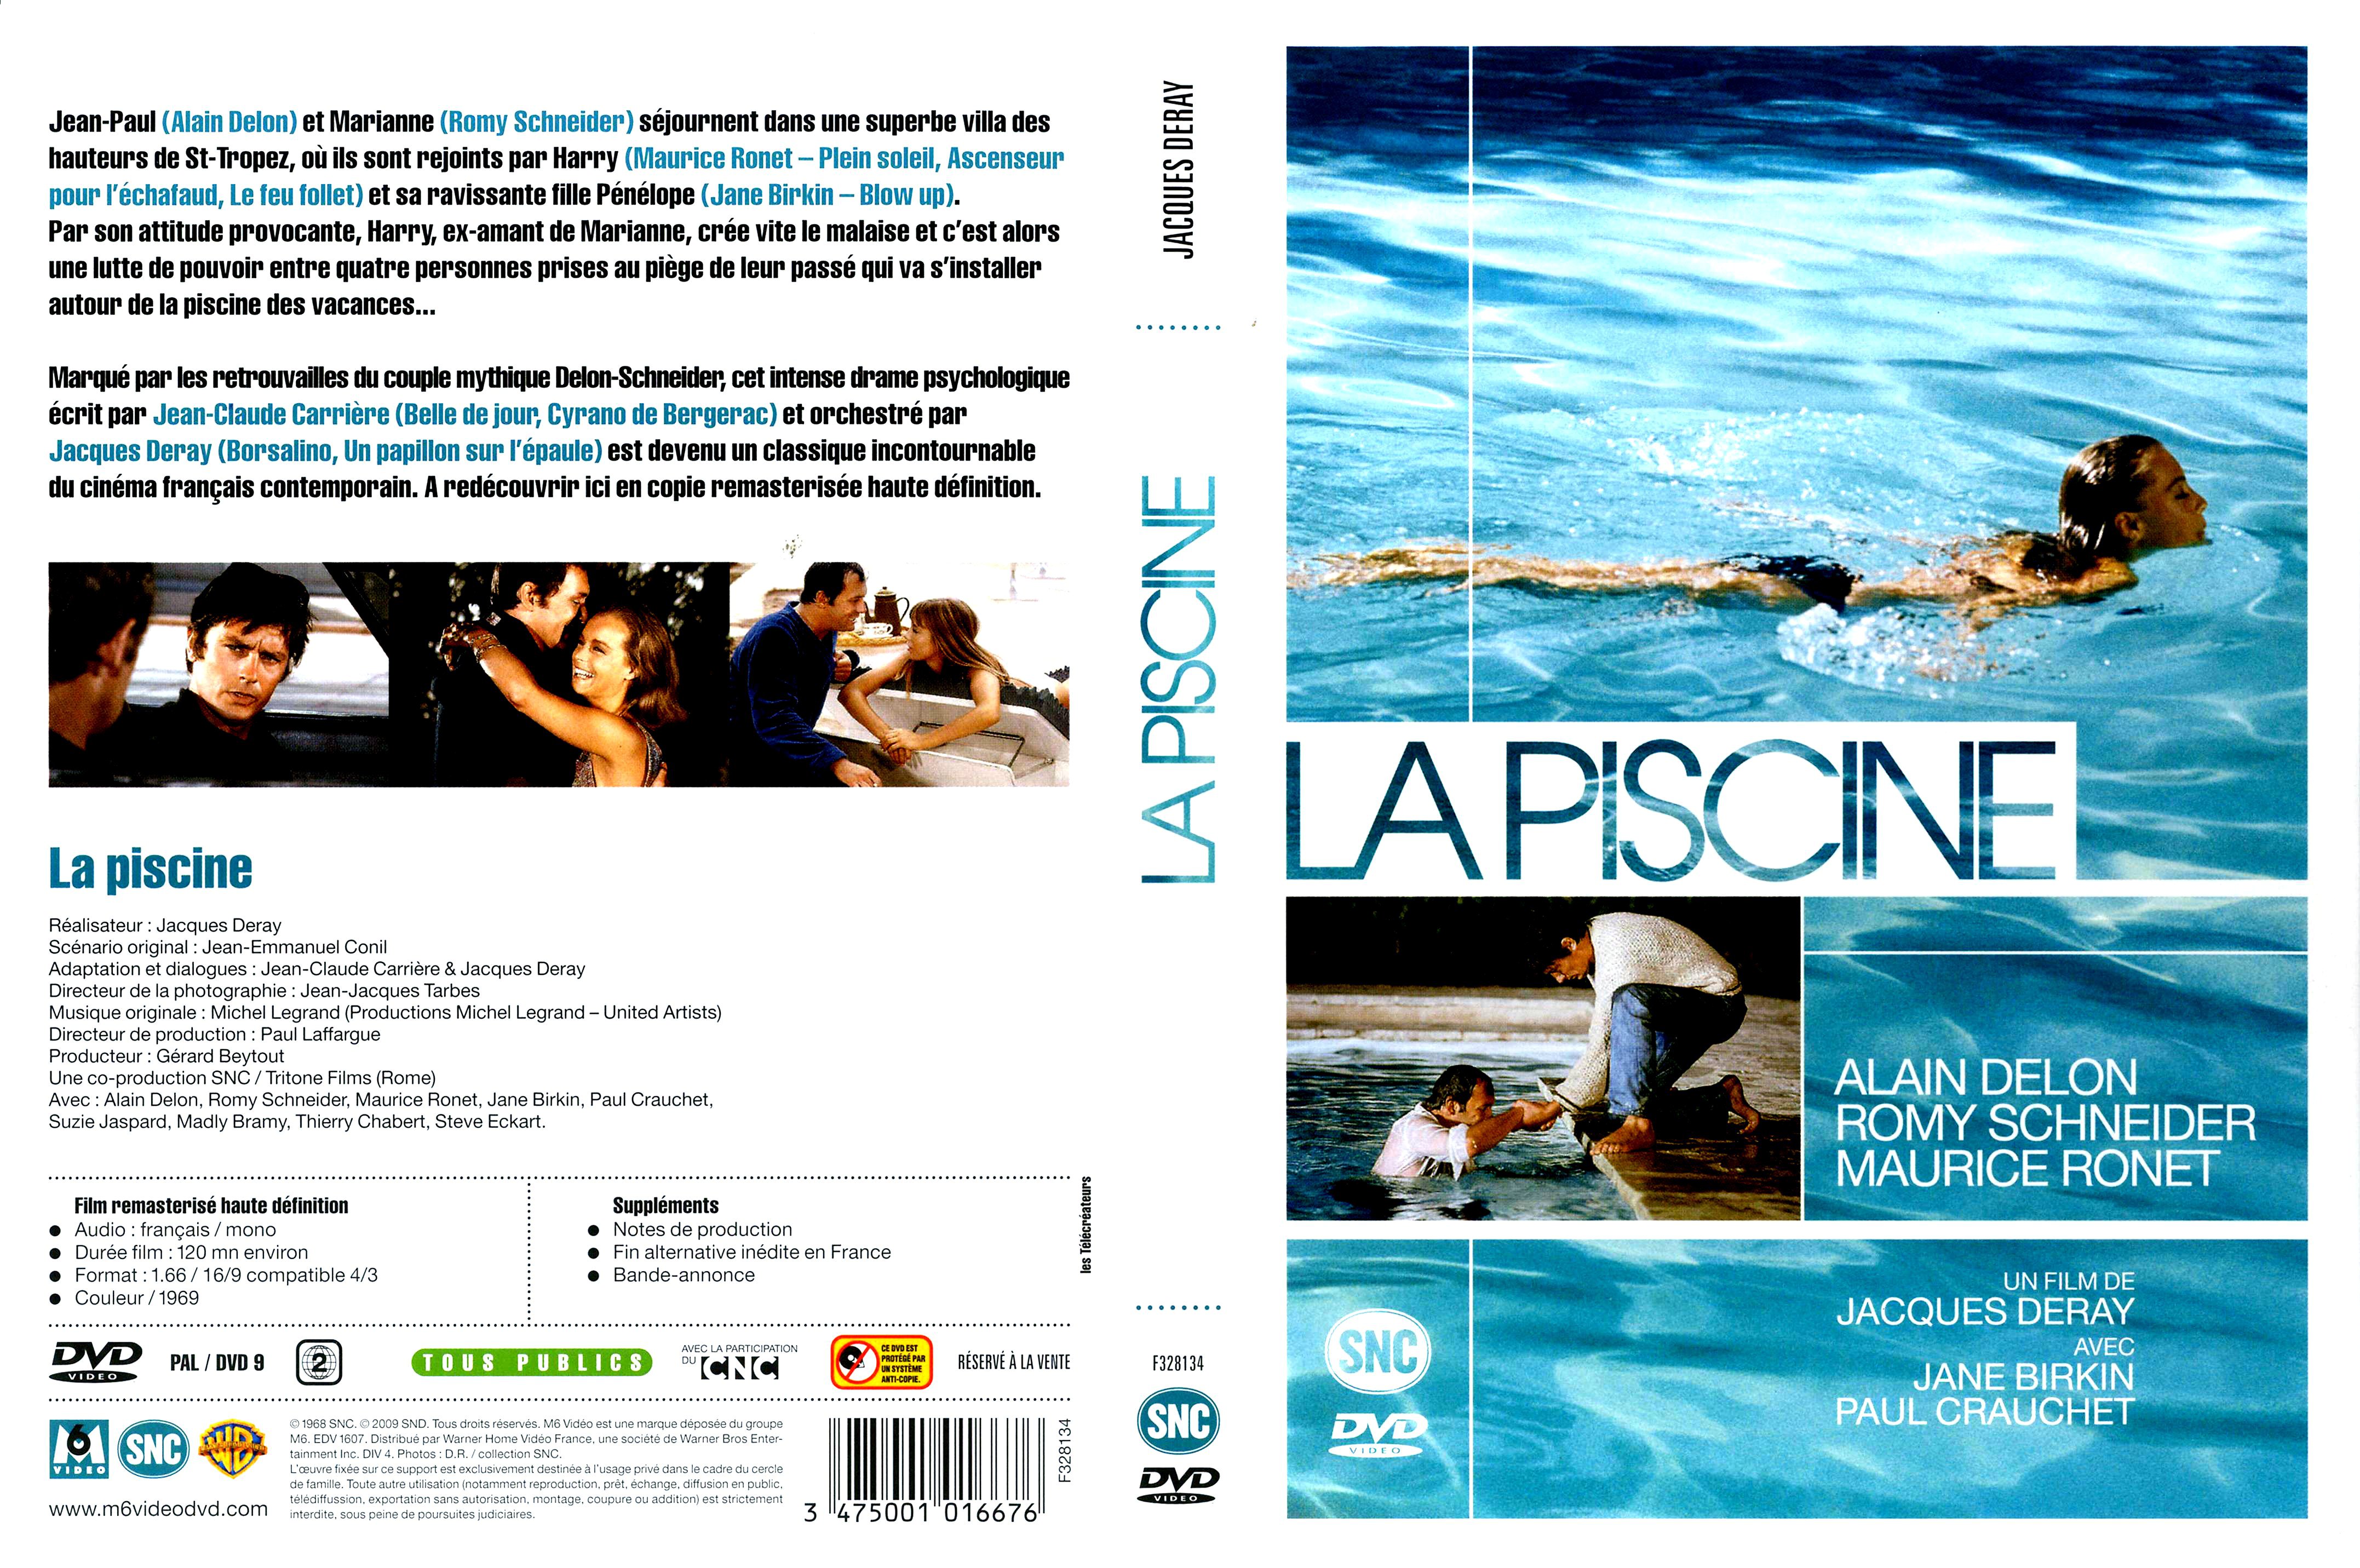 Jaquette DVD La piscine v3